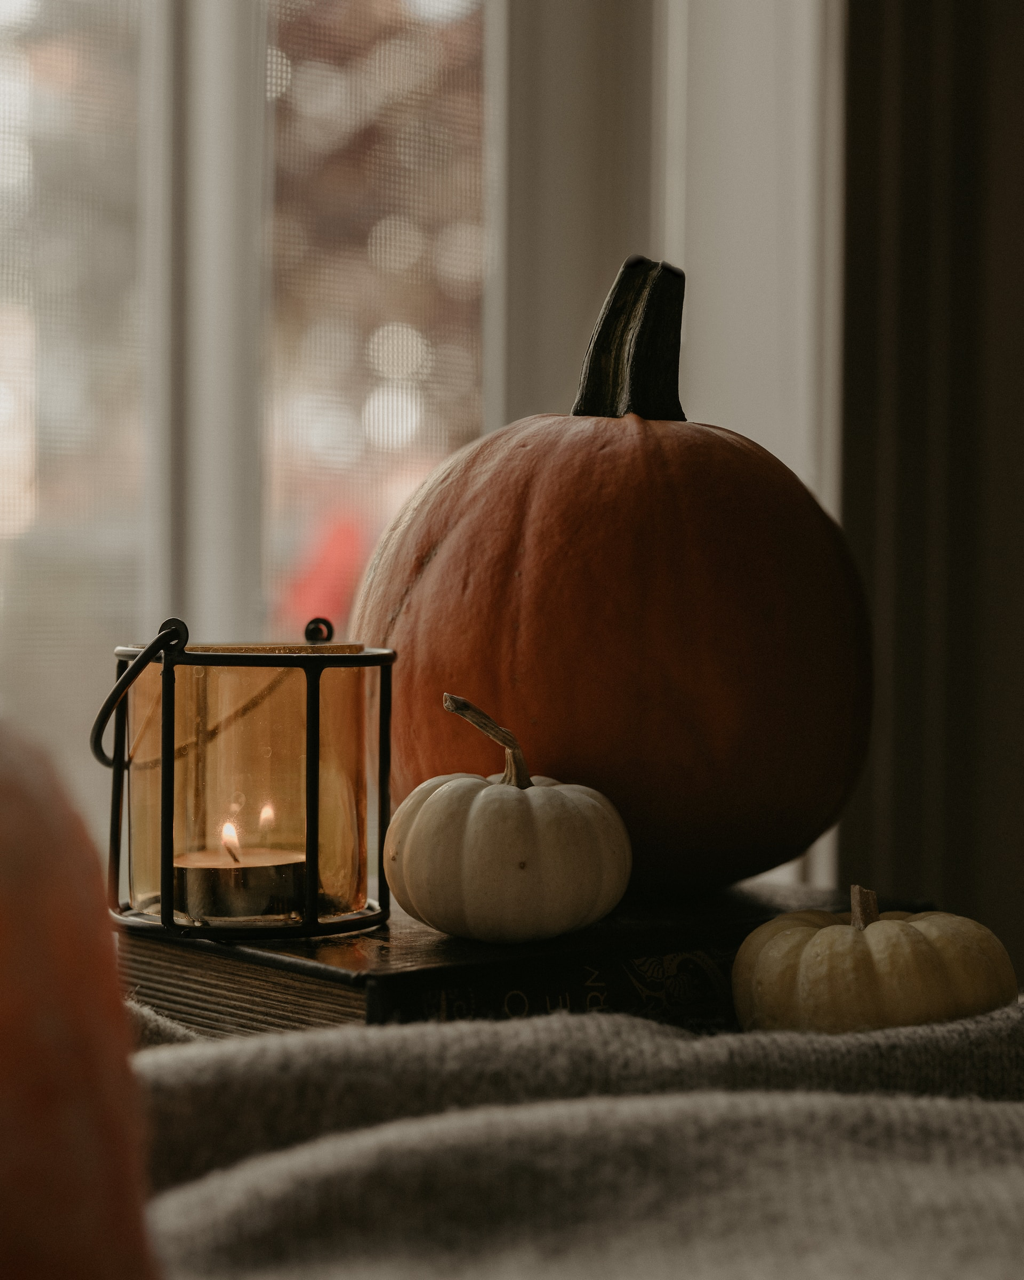 pumpkins with a lantern